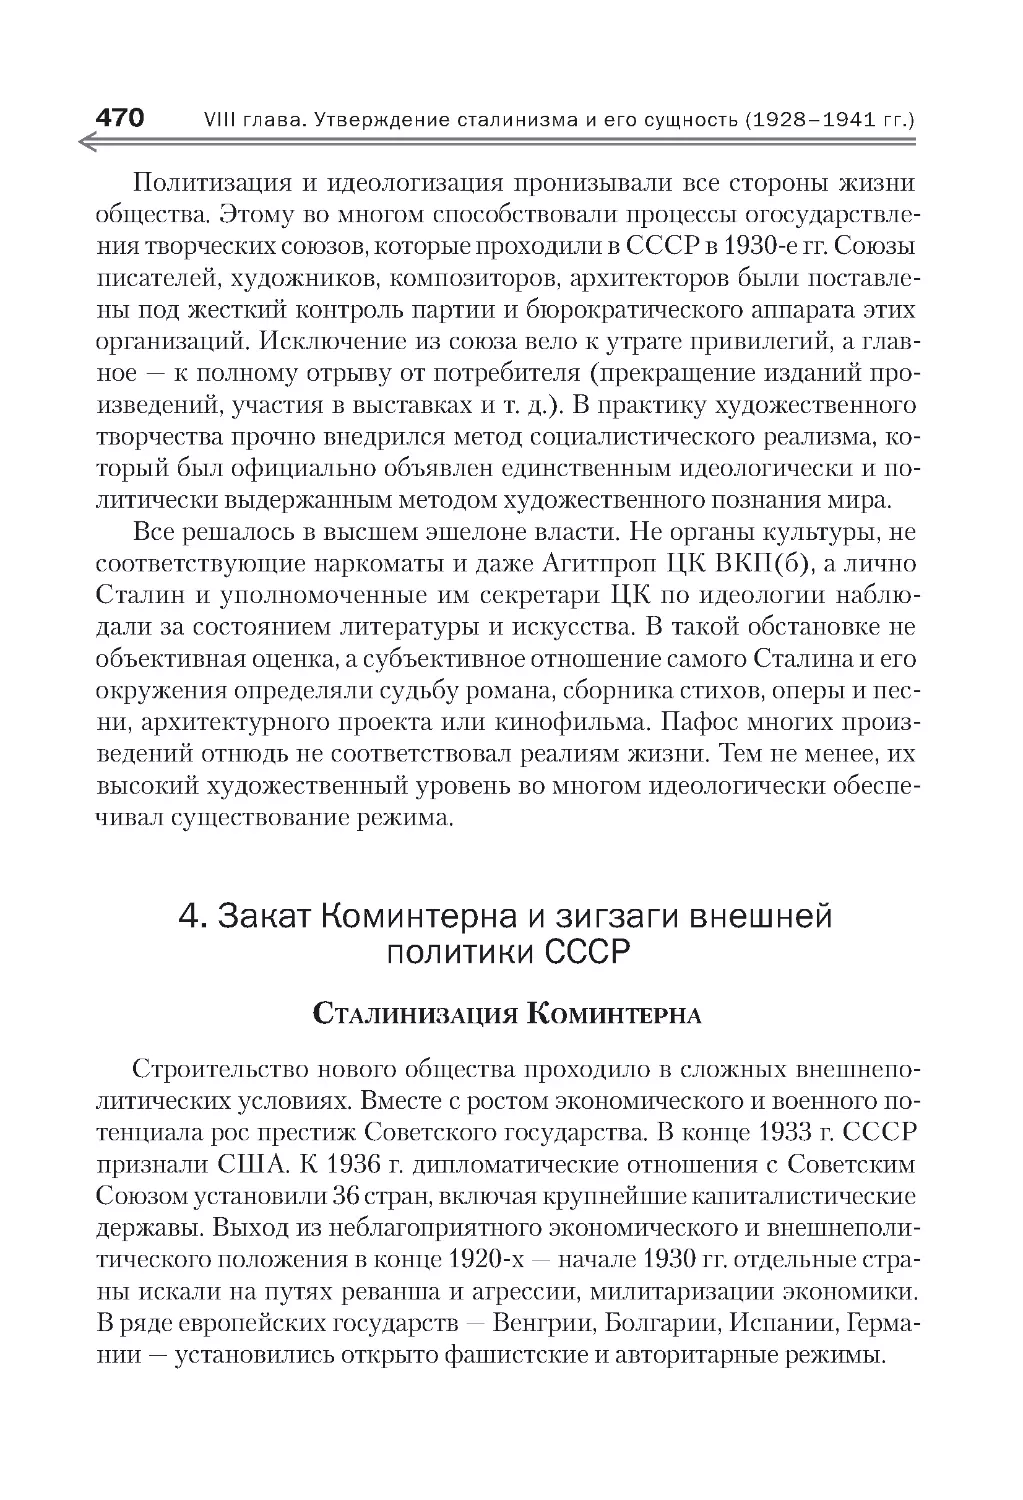 4. Закат Коминтерна и зигзаги внешней политики СССР